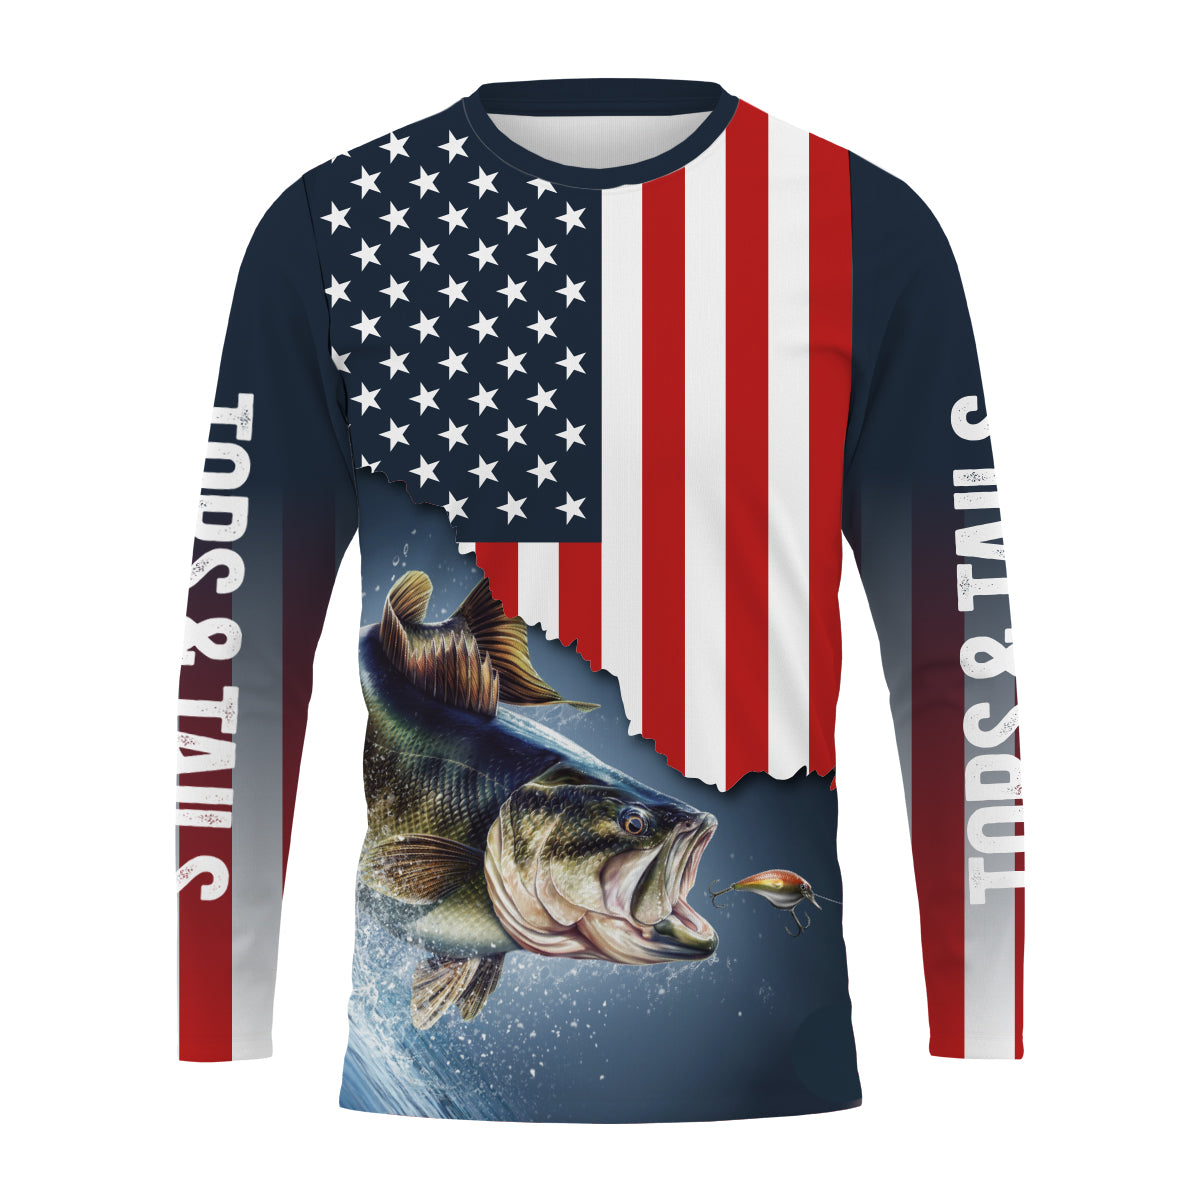 USA Flag Bass Long Sleeve Performance Shirt - Made in the USA